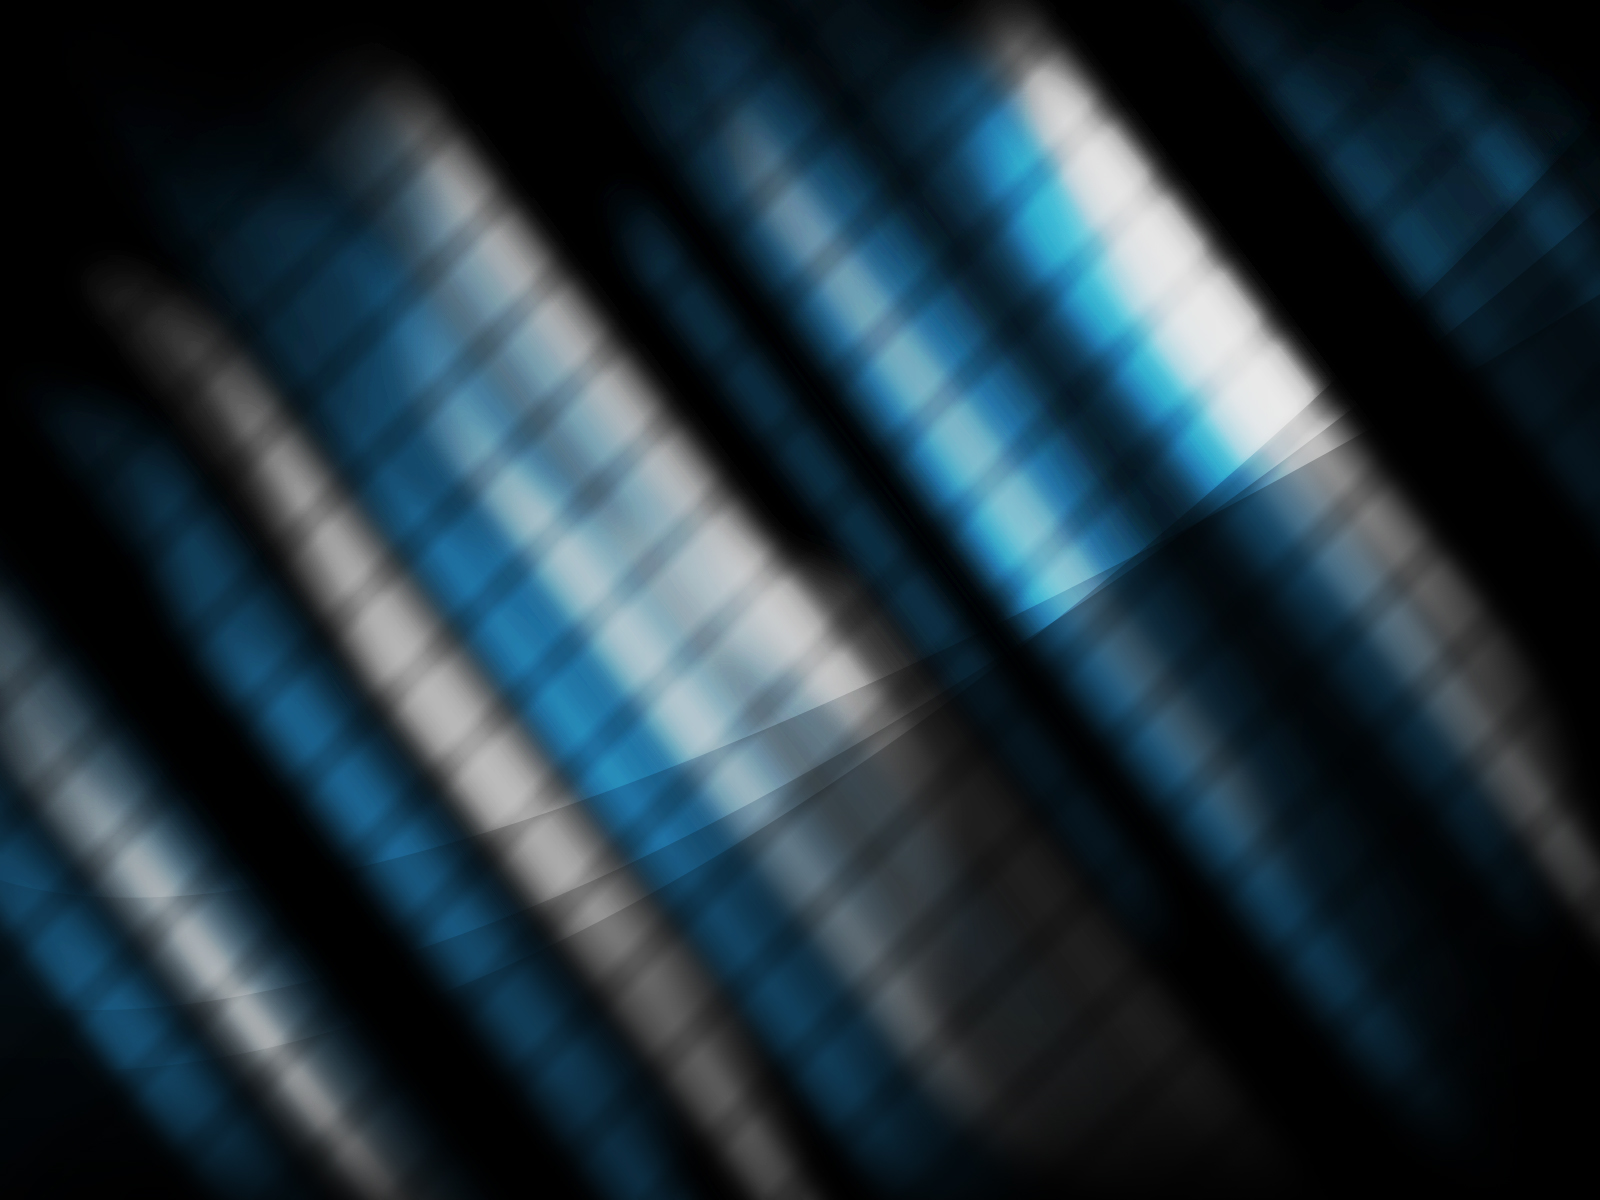 http://3.bp.blogspot.com/-lJWychbRF0I/Tga51T_0A2I/AAAAAAAAASo/J9v_3DXSwHE/s1600/blue_designs_abstract-normal.jpg